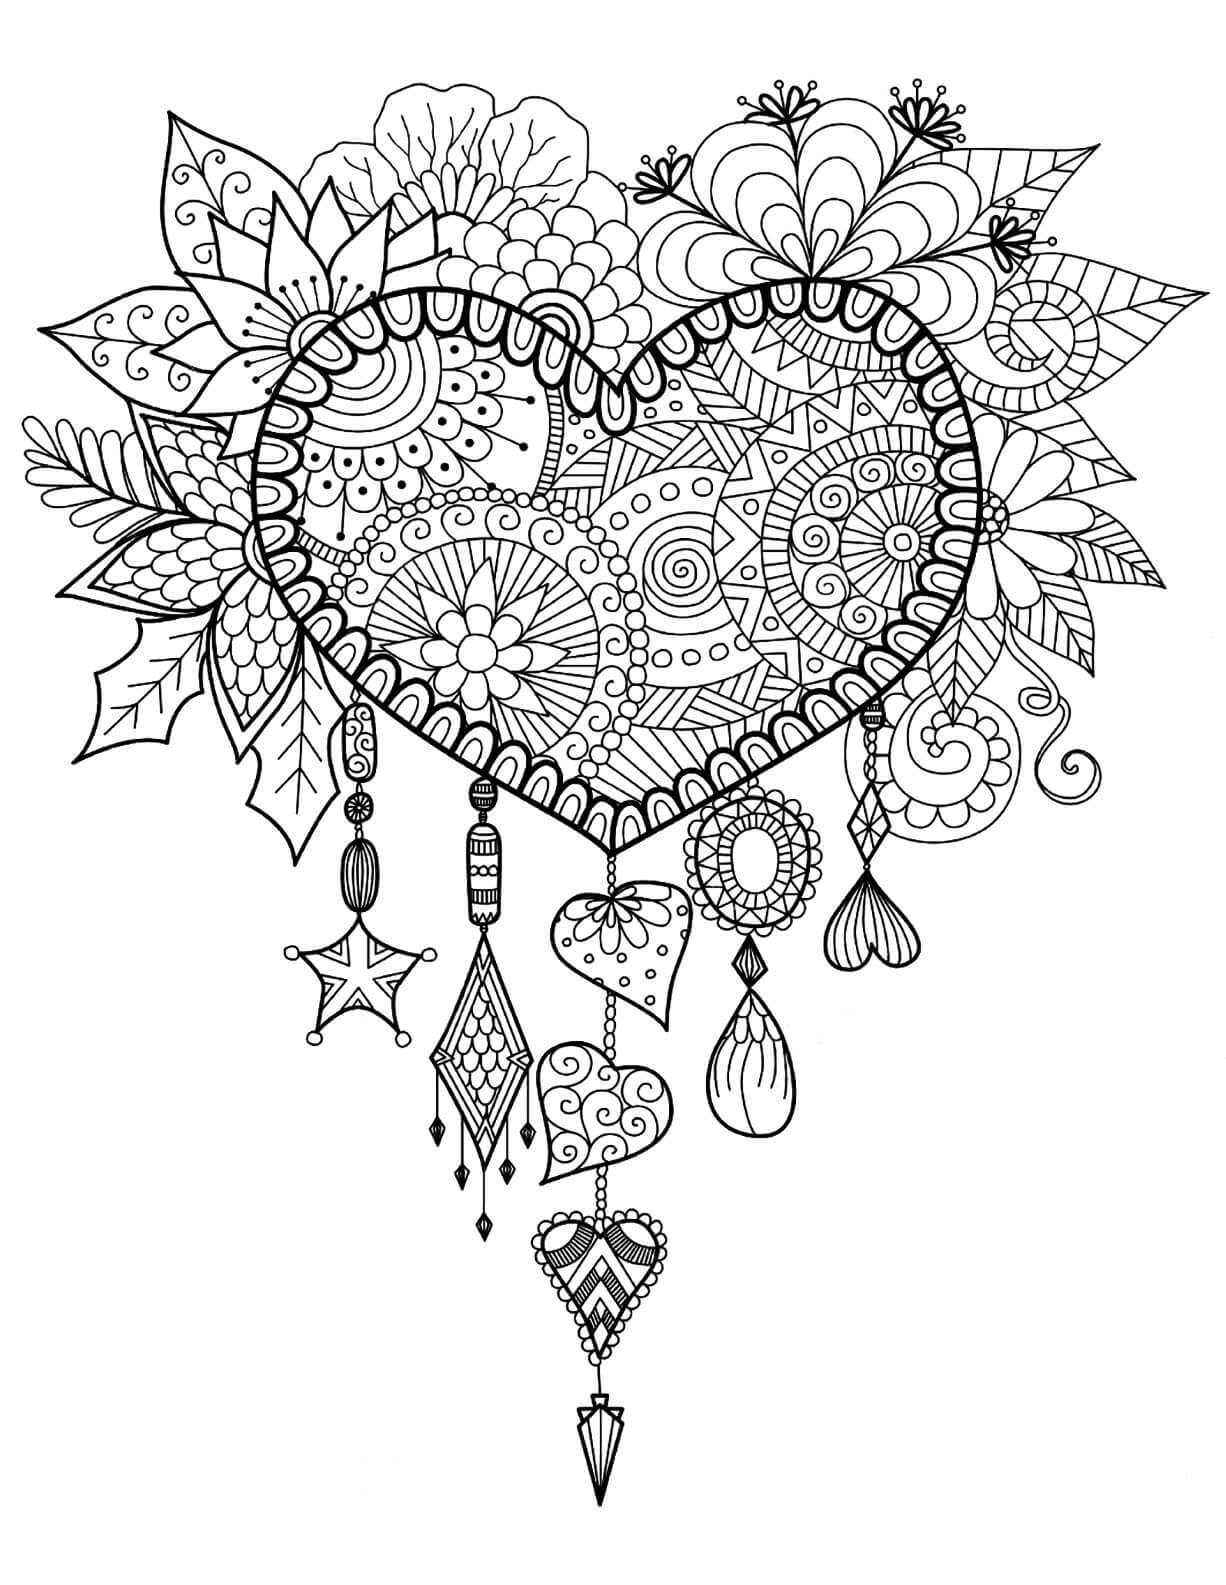 Mandala Heart Coloring Page - Sheet 7 Mandalas